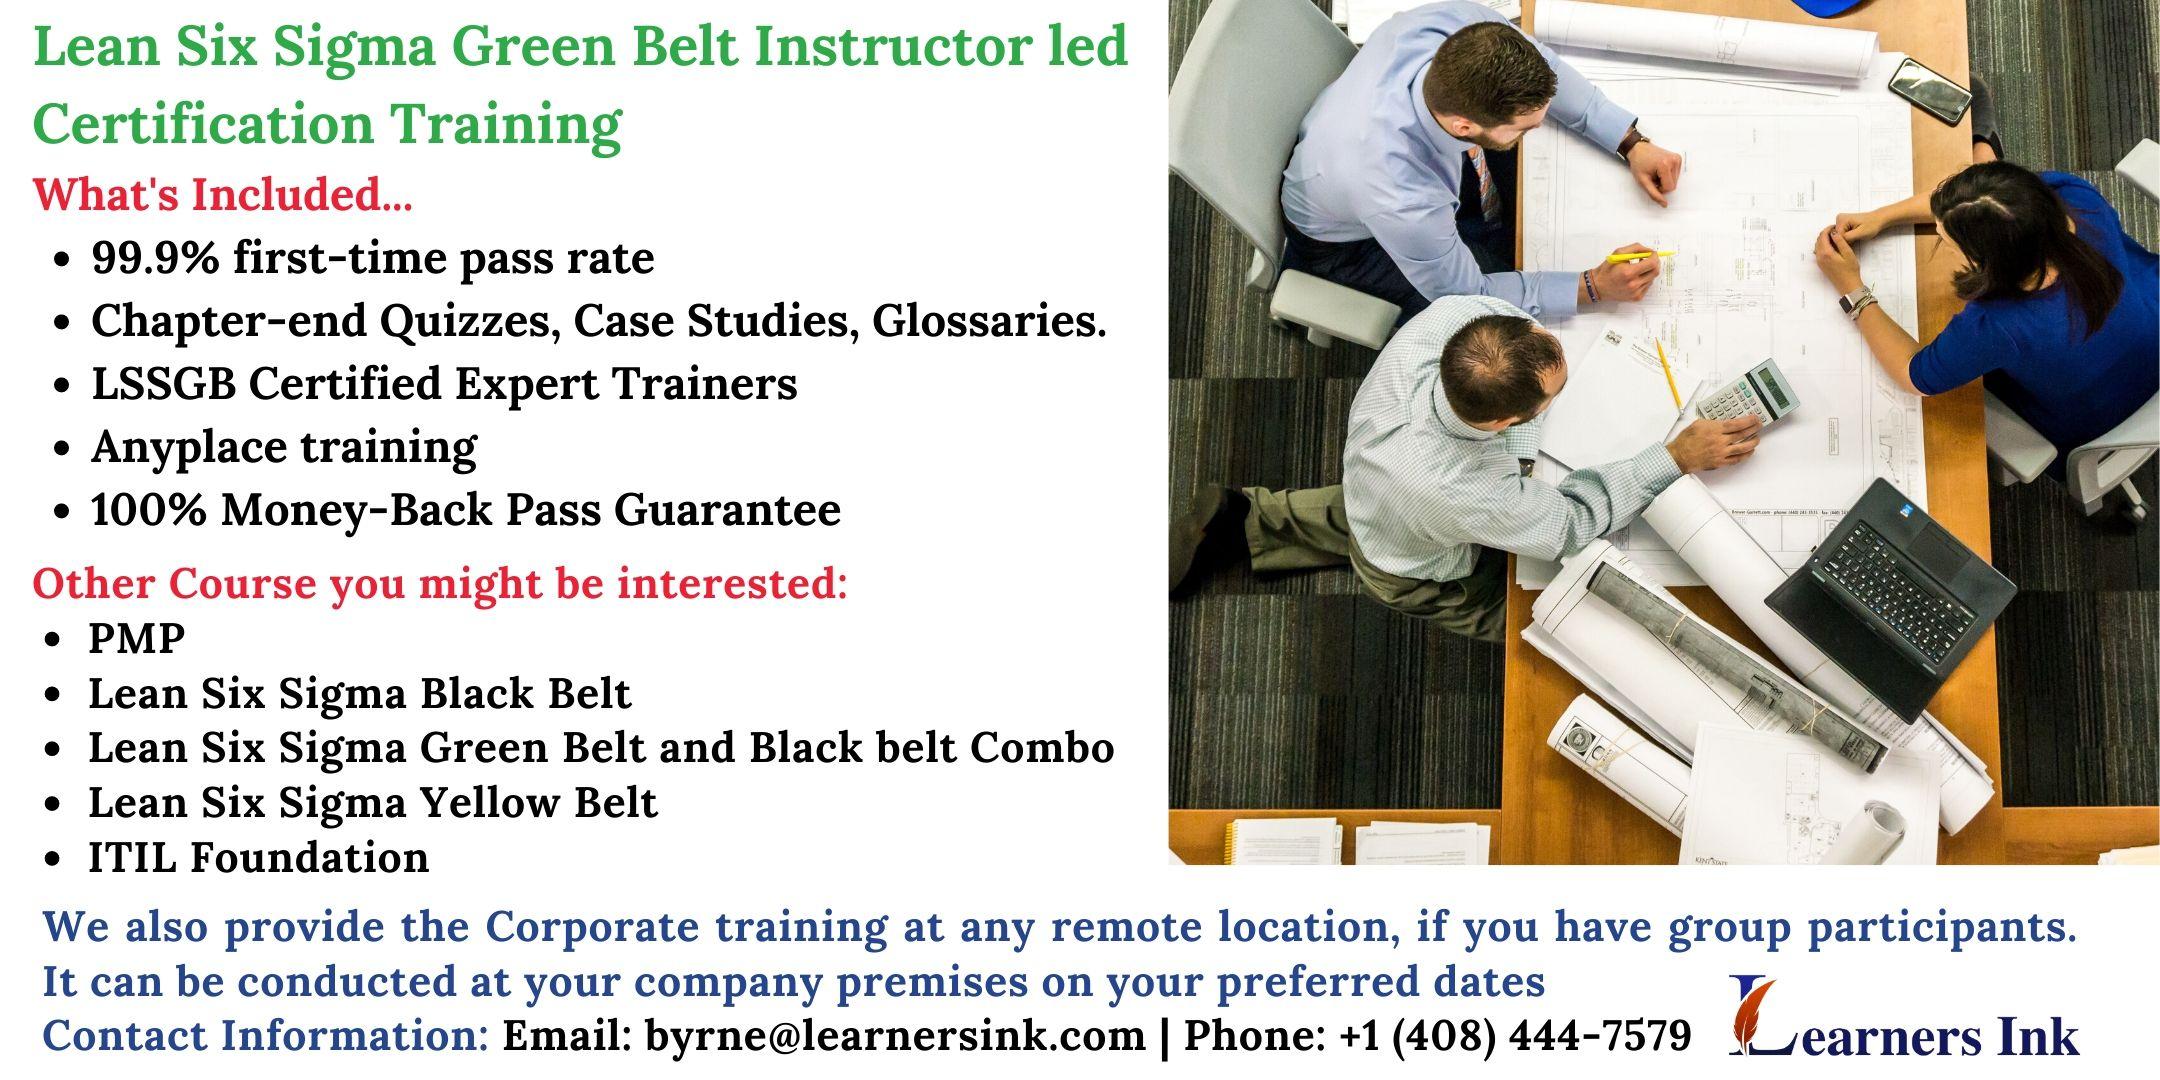 Lean Six Sigma Green Belt Certification Training Course (LSSGB) in Centennial